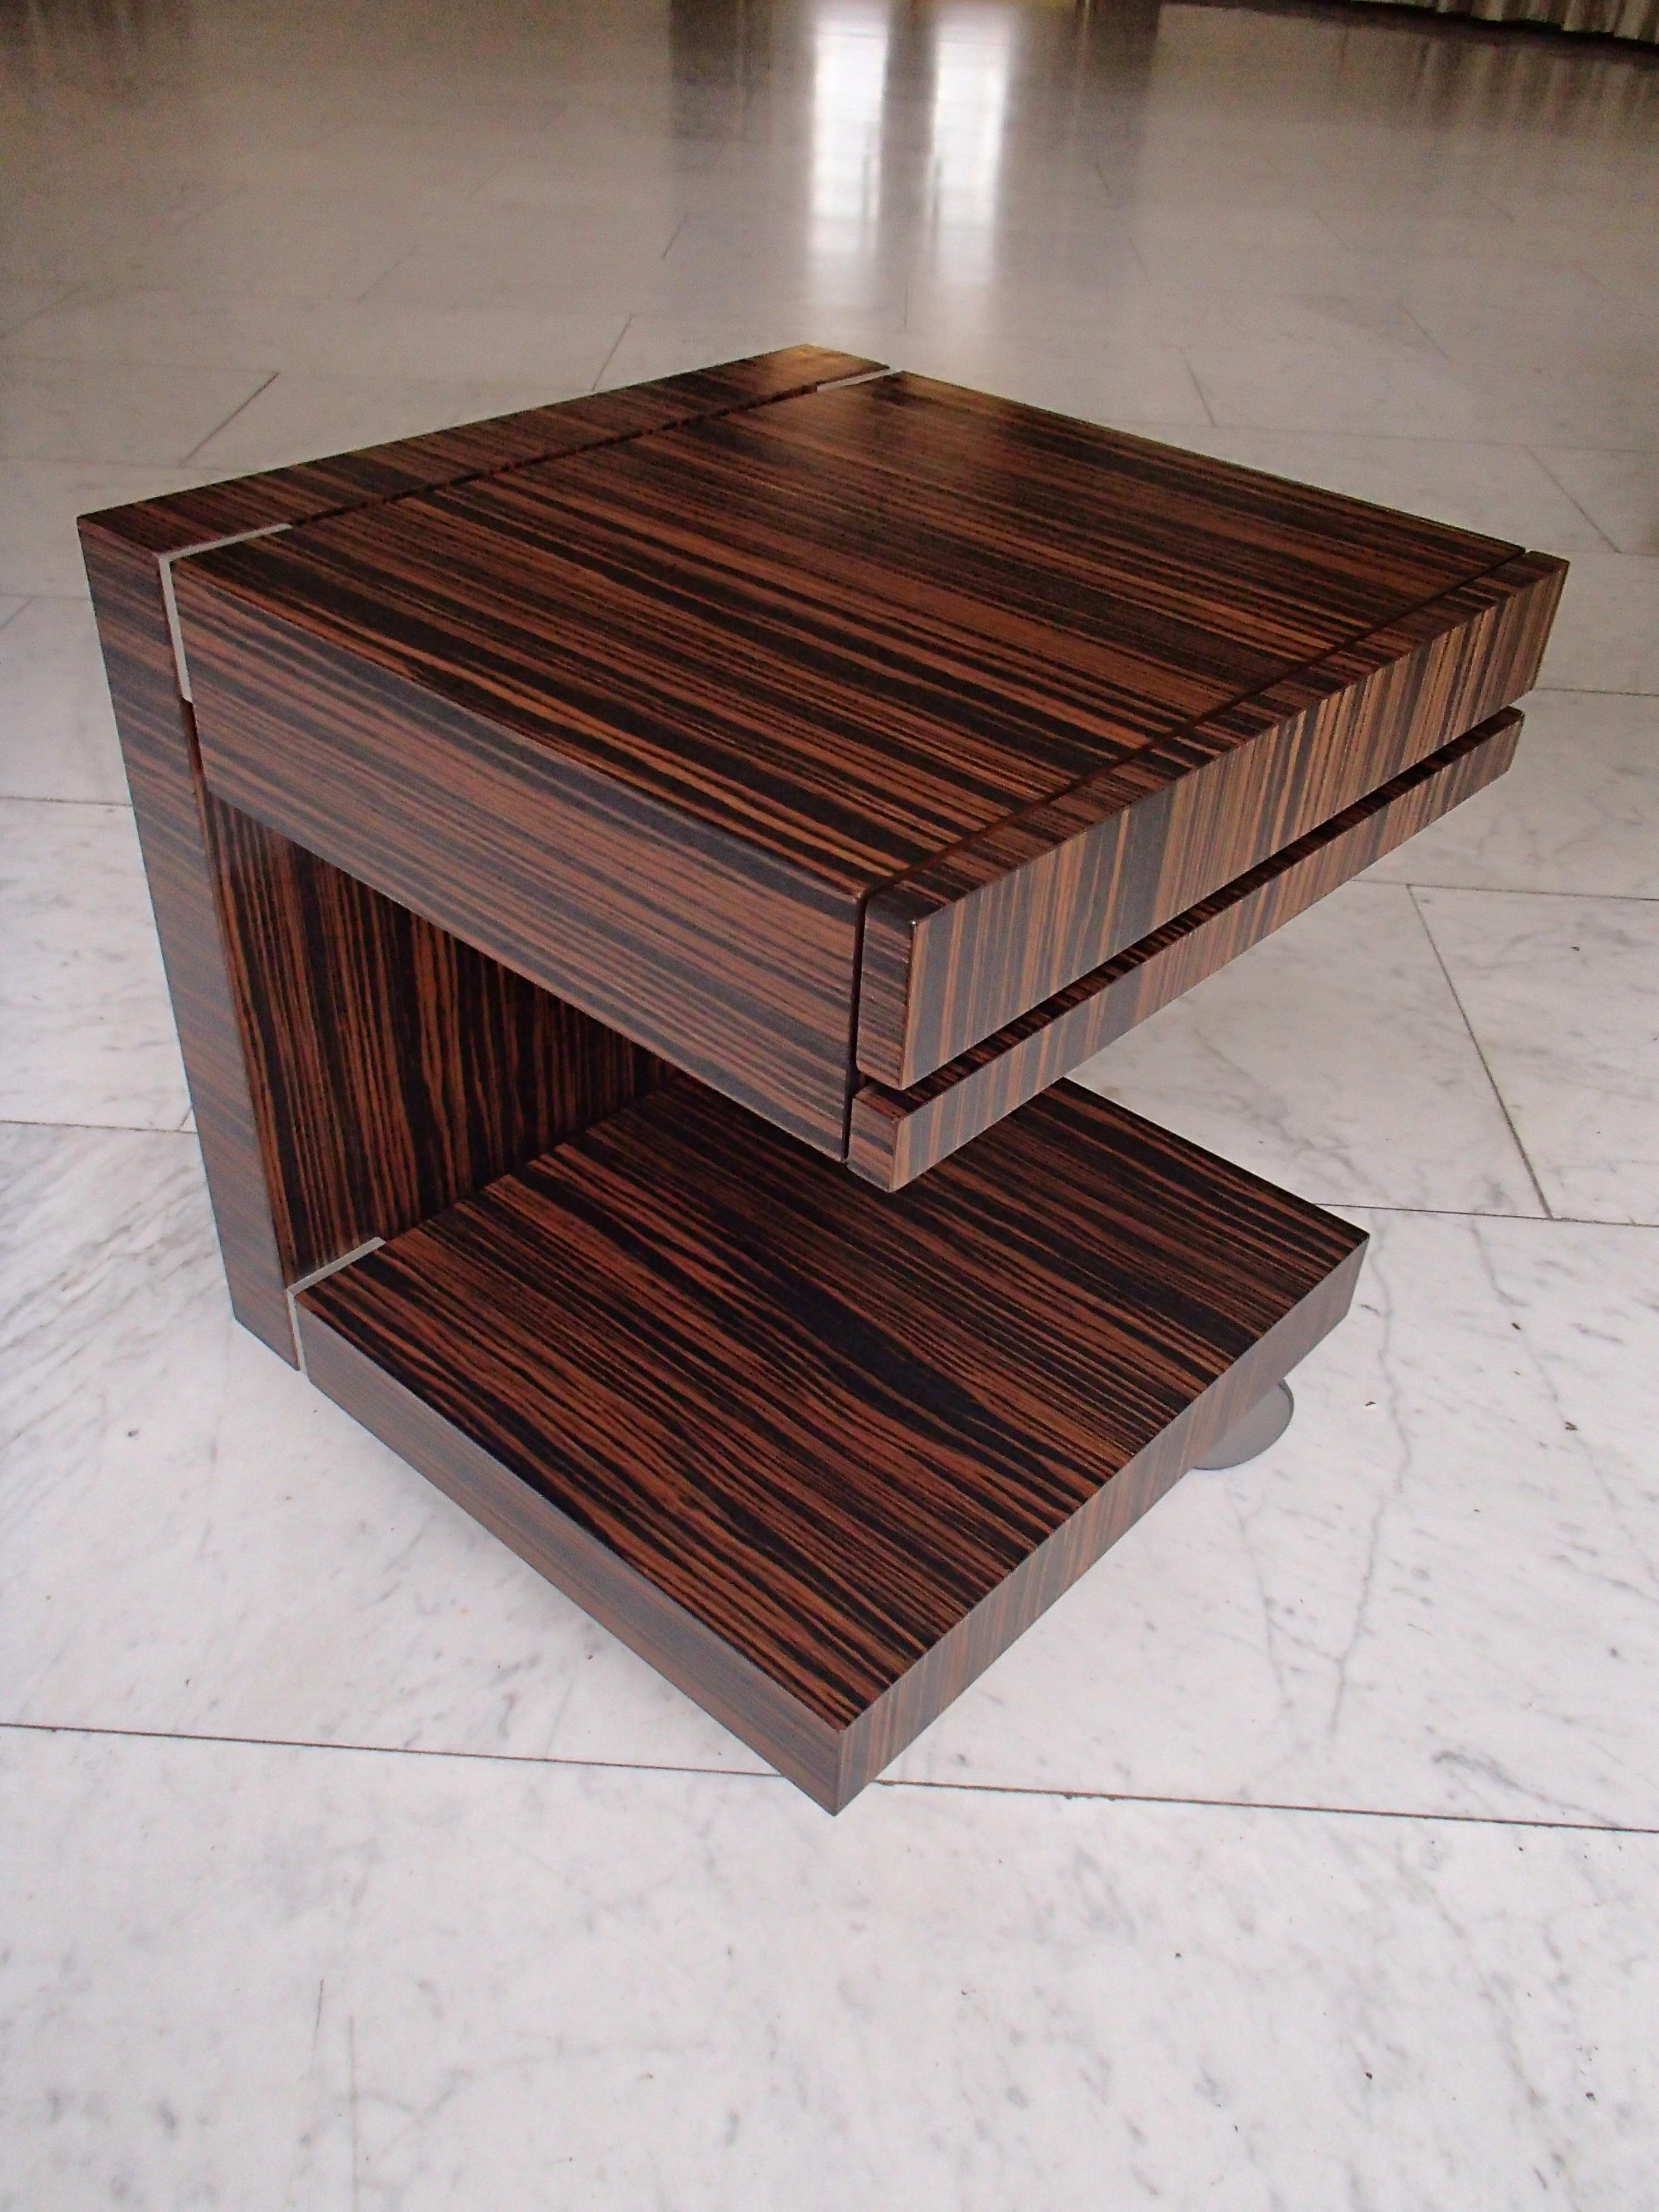 Modern Art Deco ebene de macassar side table or nightstand with drawer on wheels
by Swissflex an high end swiss manufacterer.